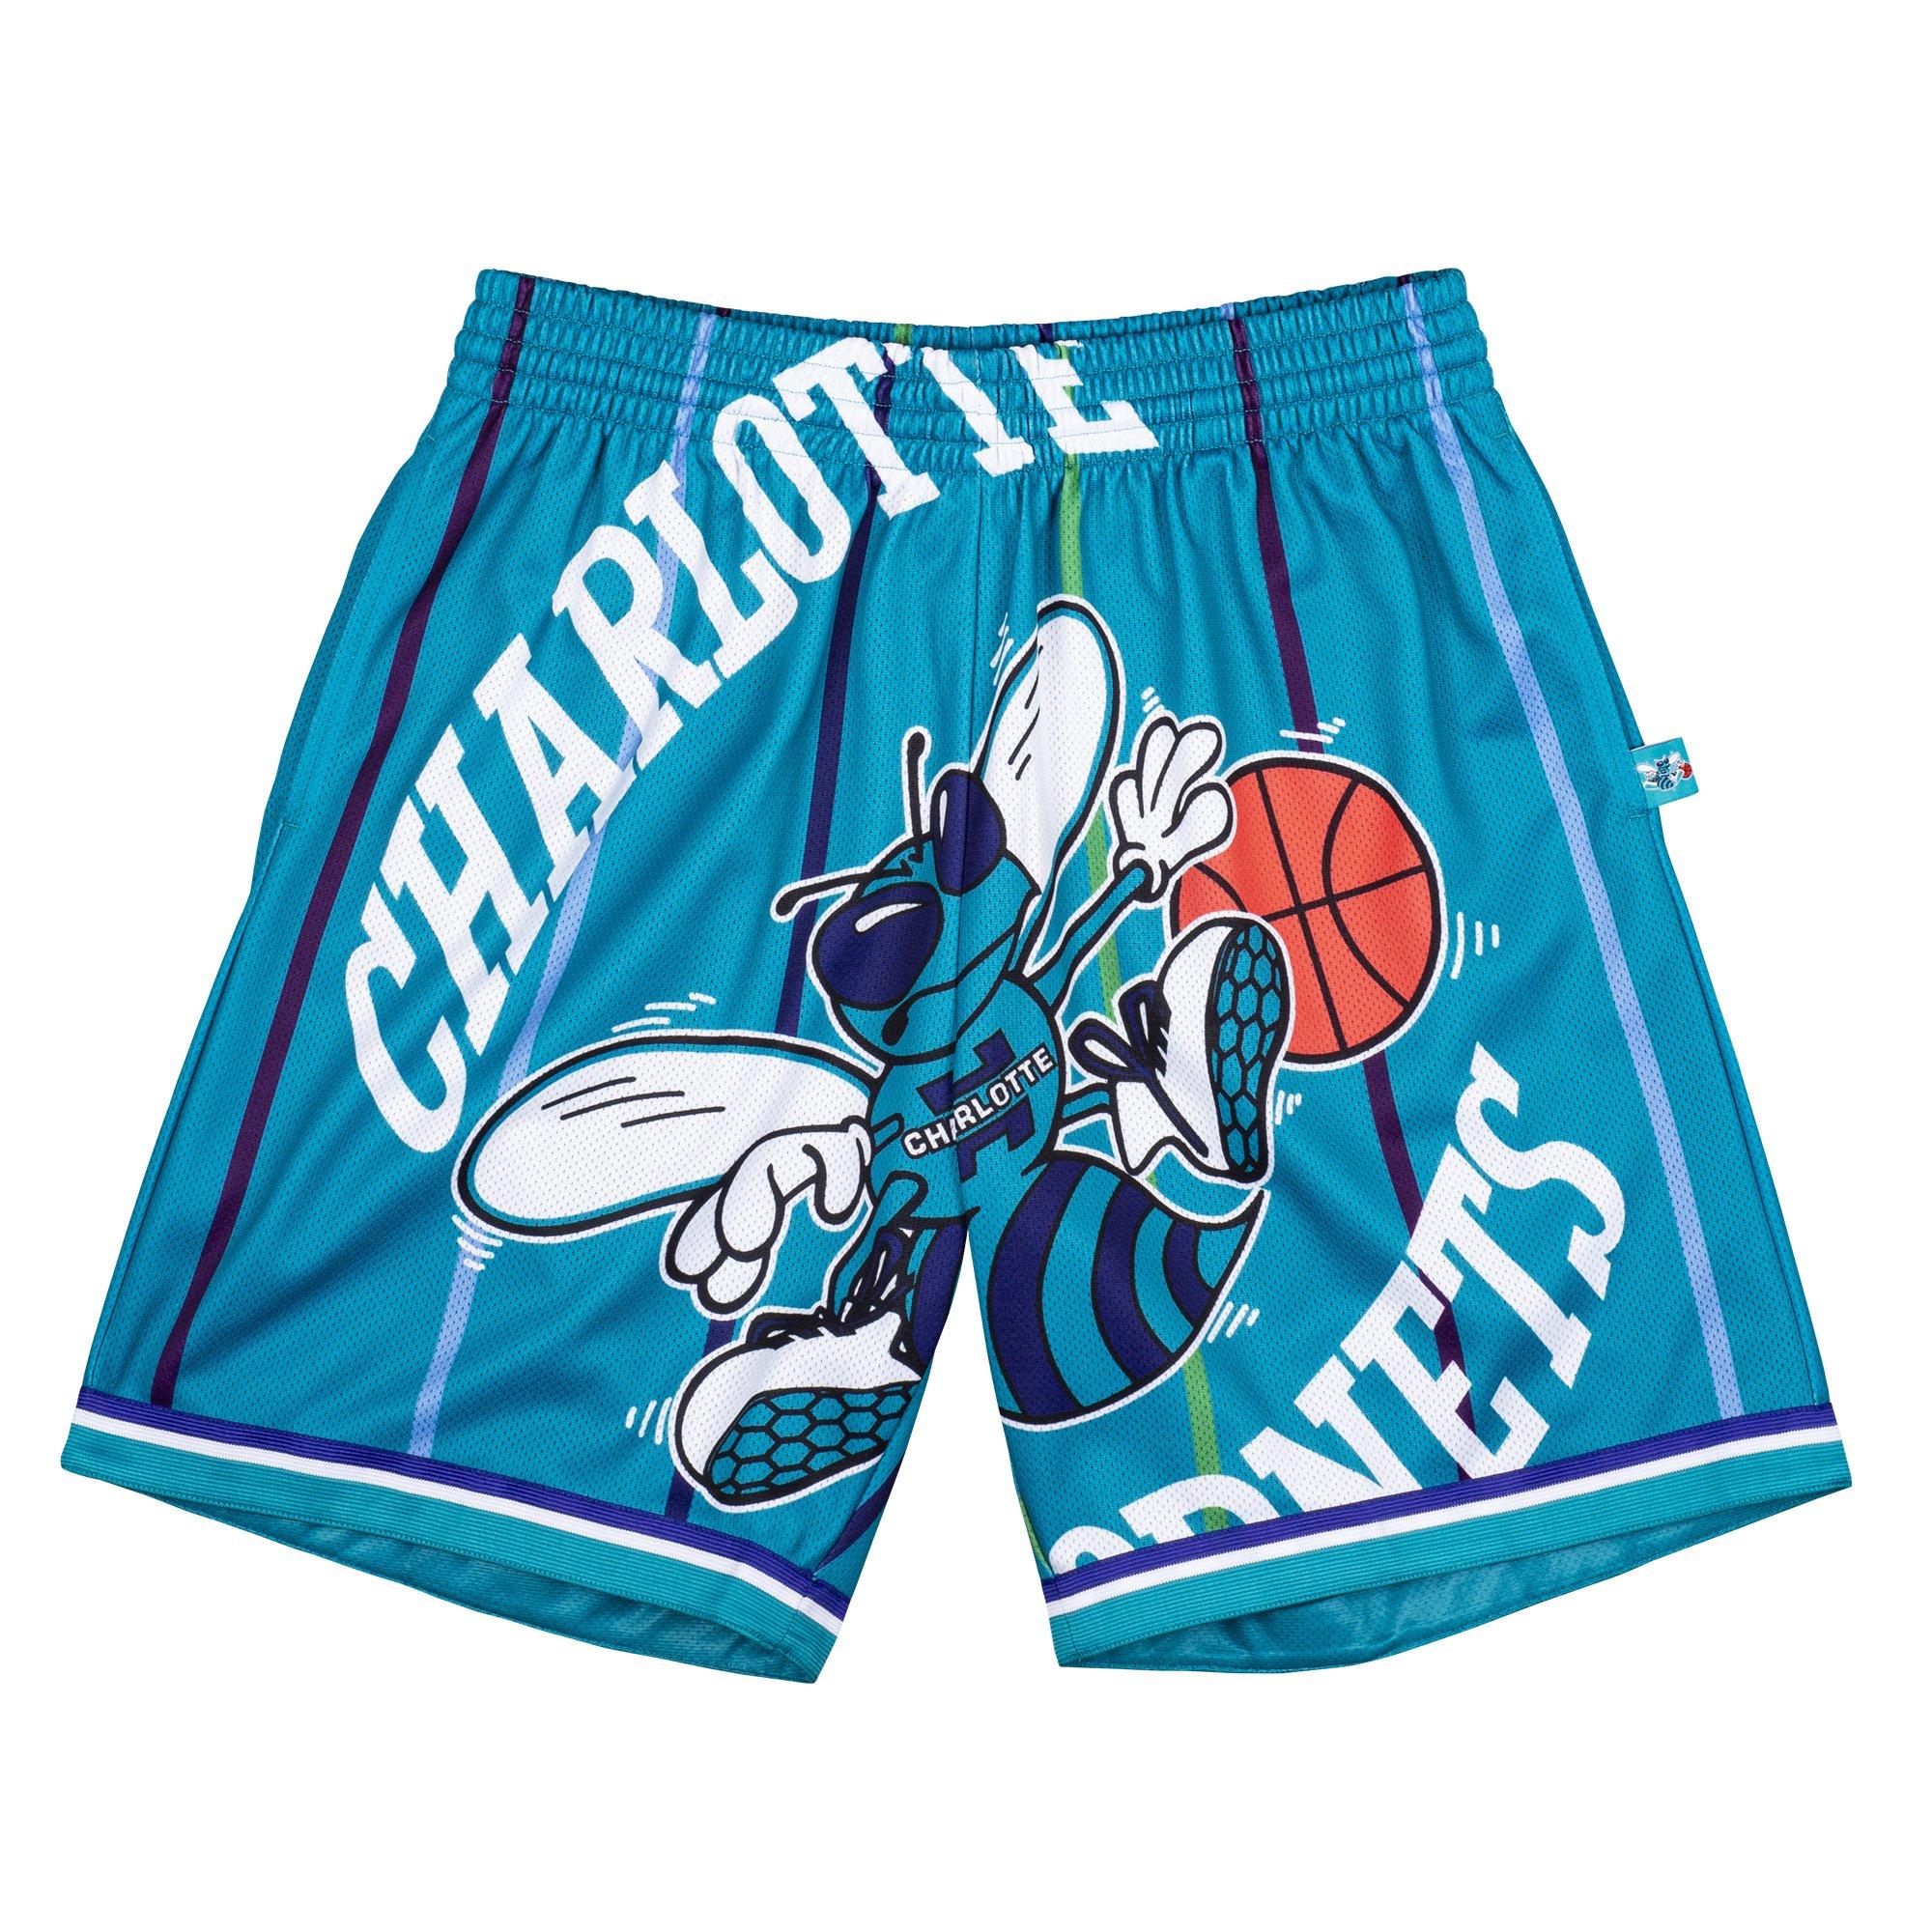 Official Charlotte Hornets Shorts, Basketball Shorts, Gym Shorts,  Compression Shorts